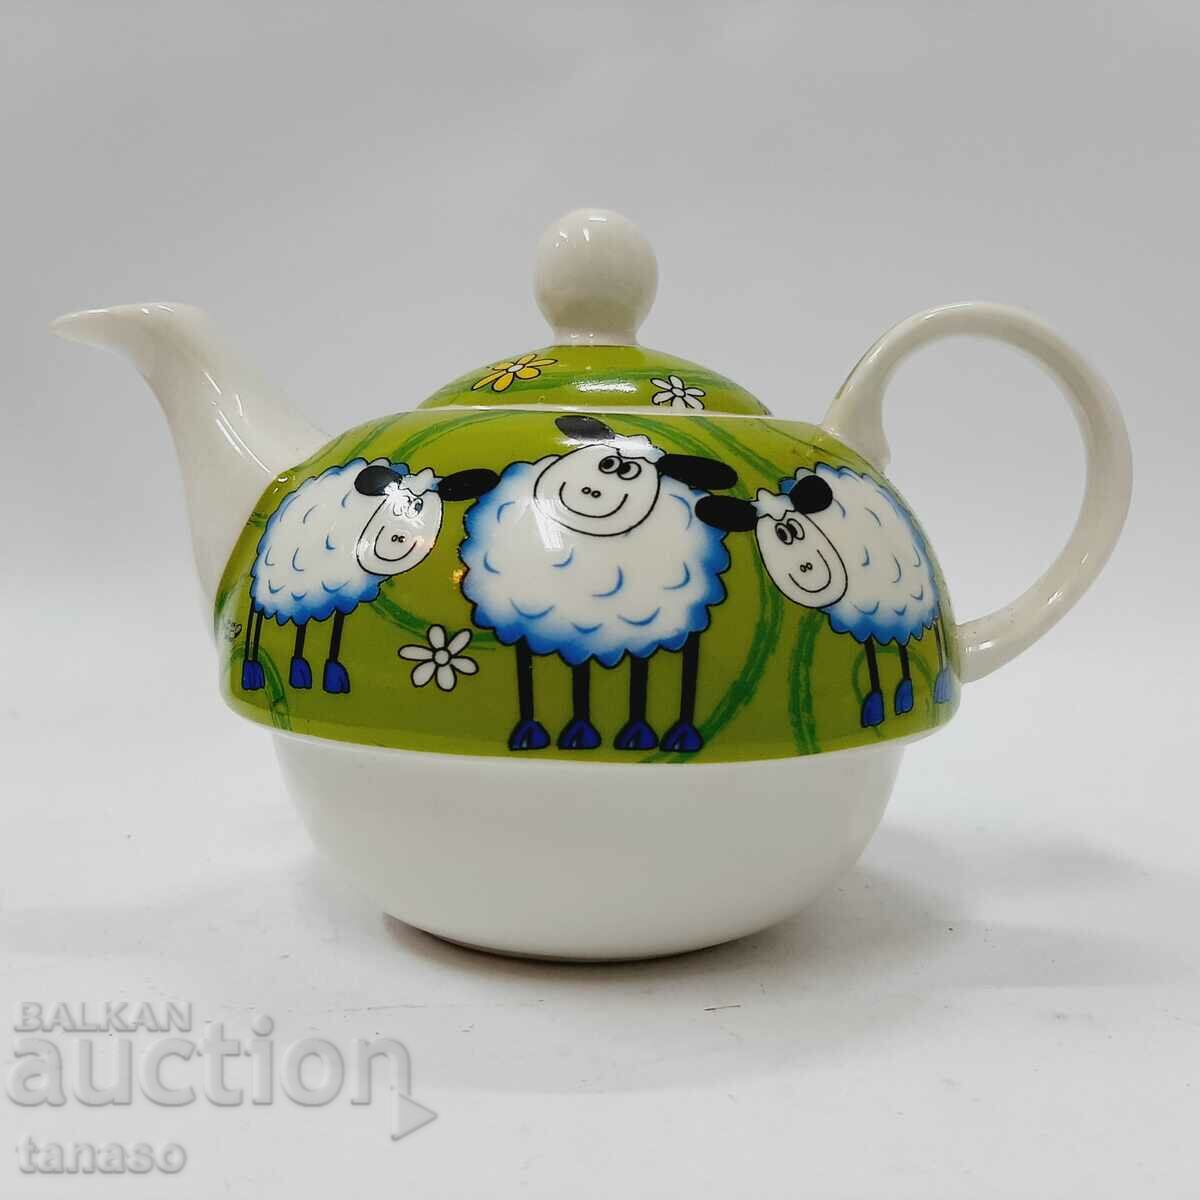 Wisen porcelain teapot, Germany(7.4)